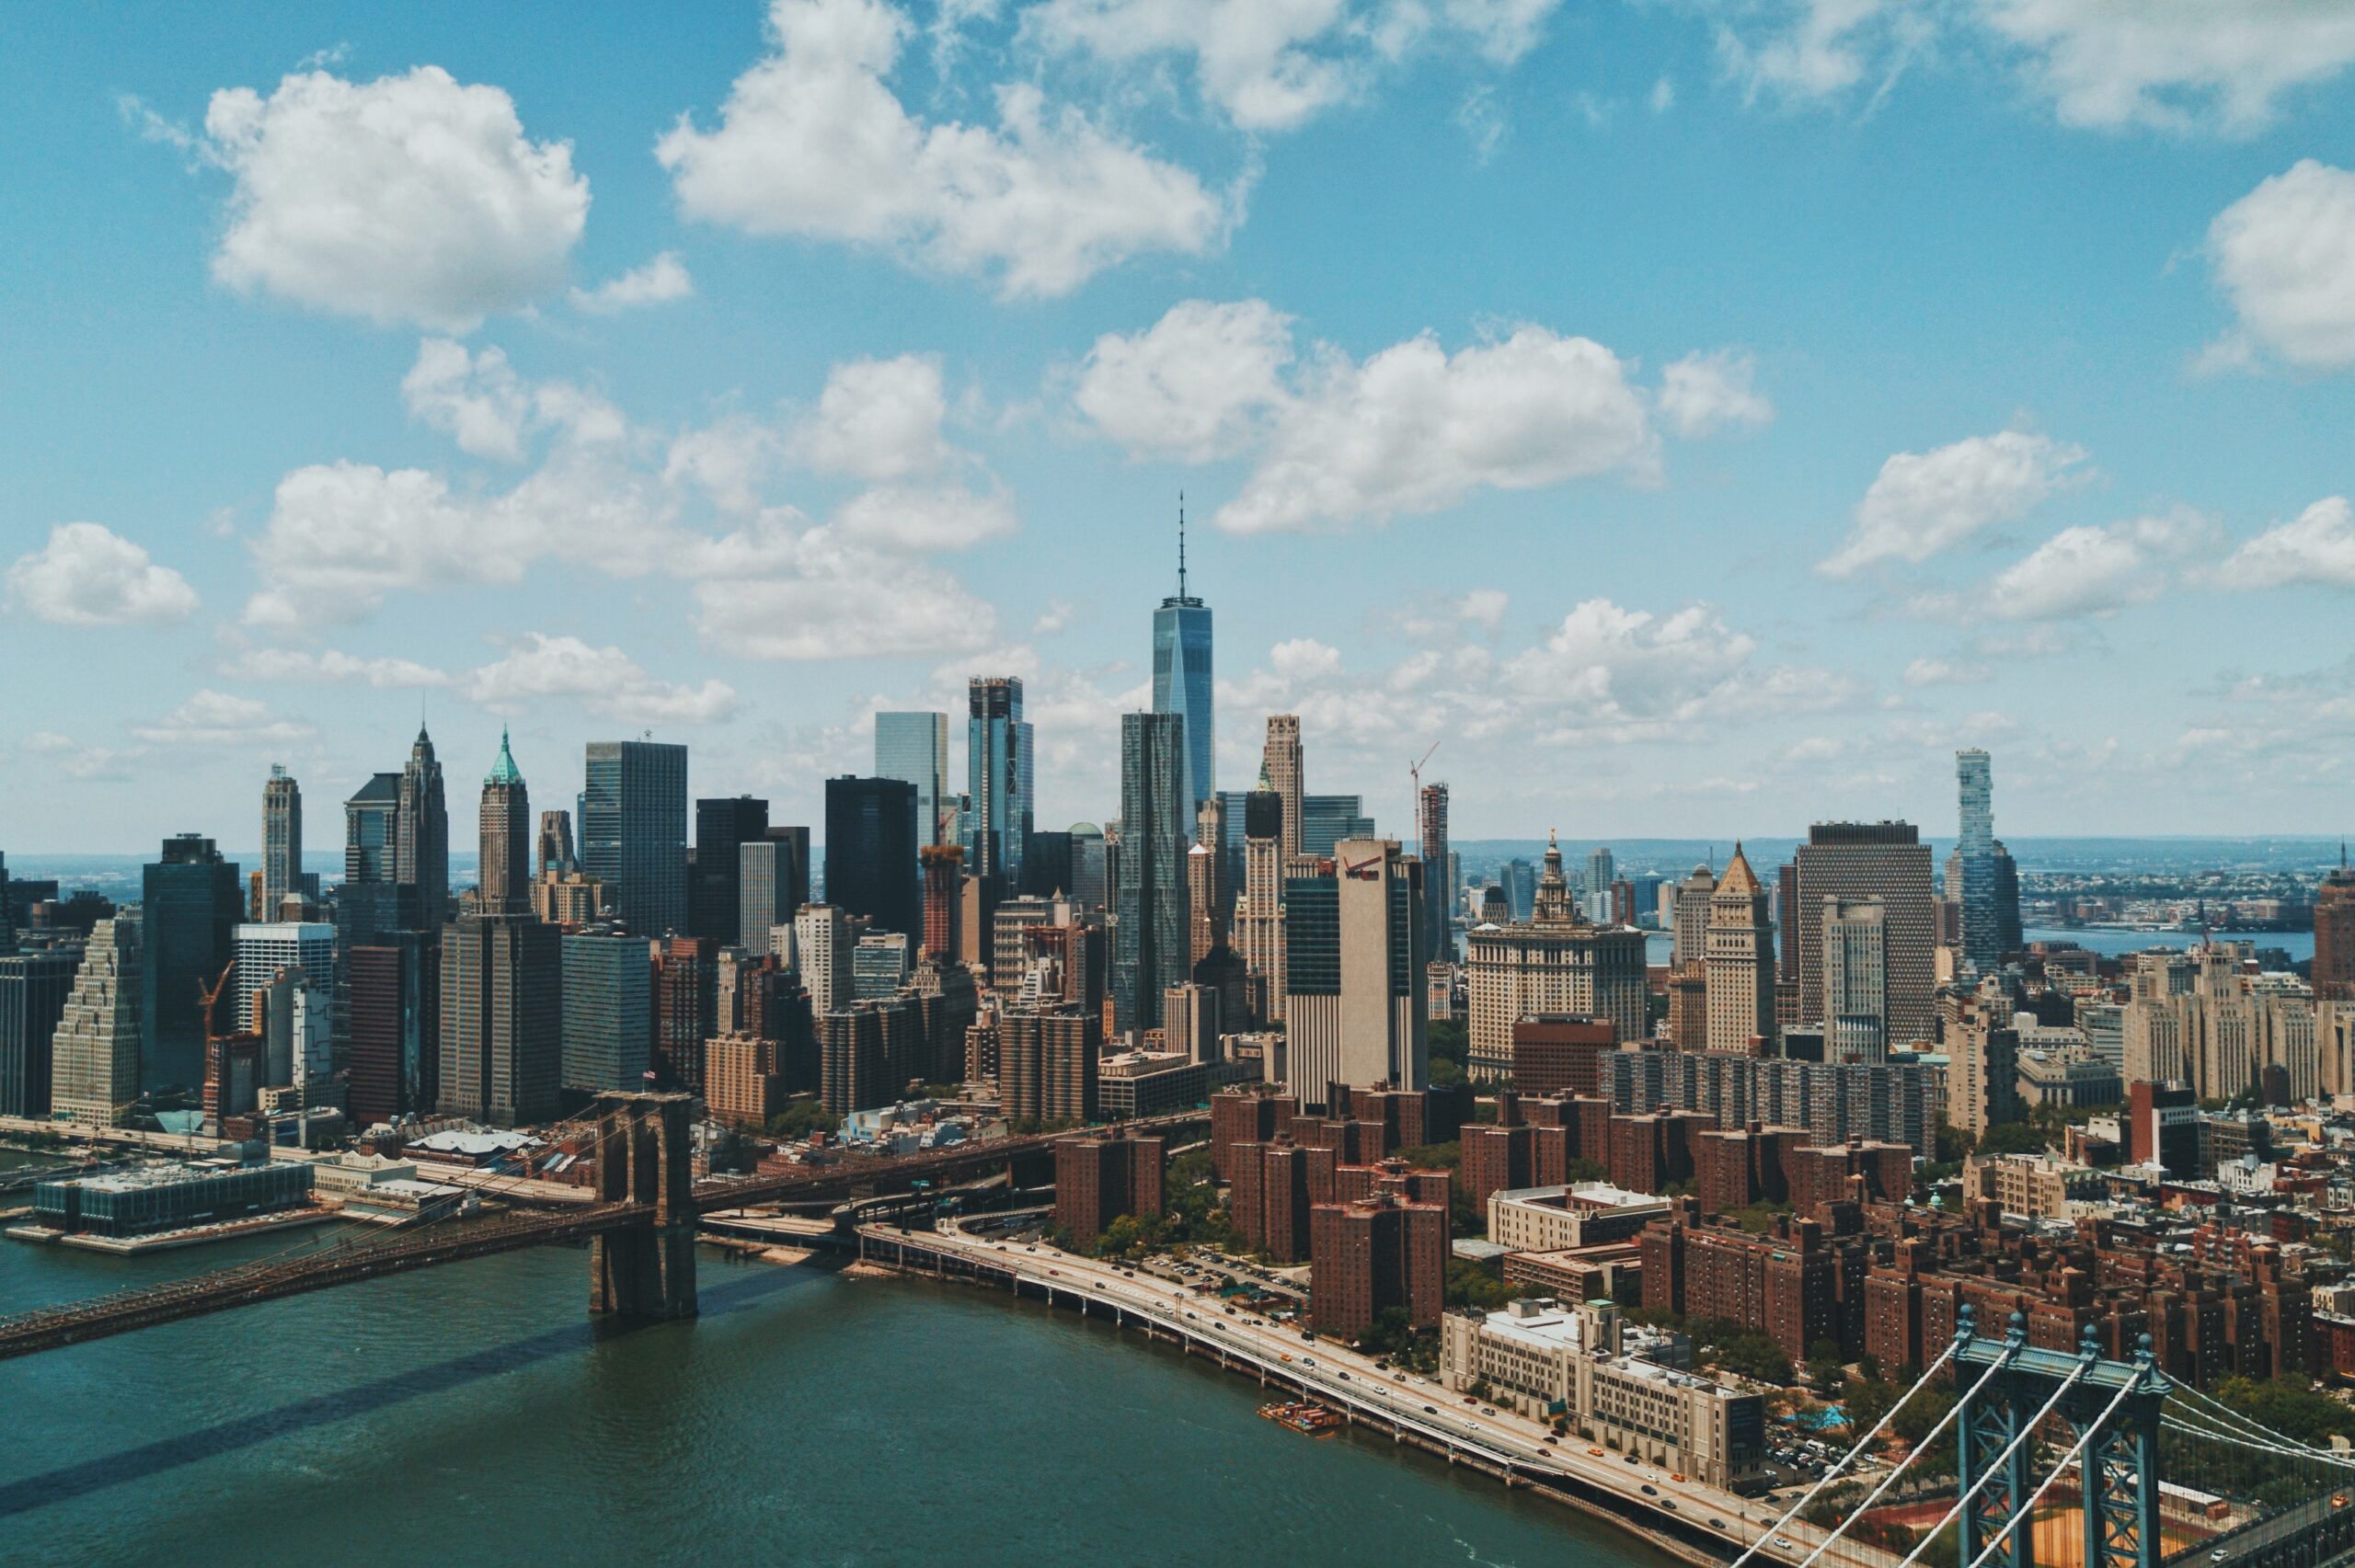 The New York City skyline